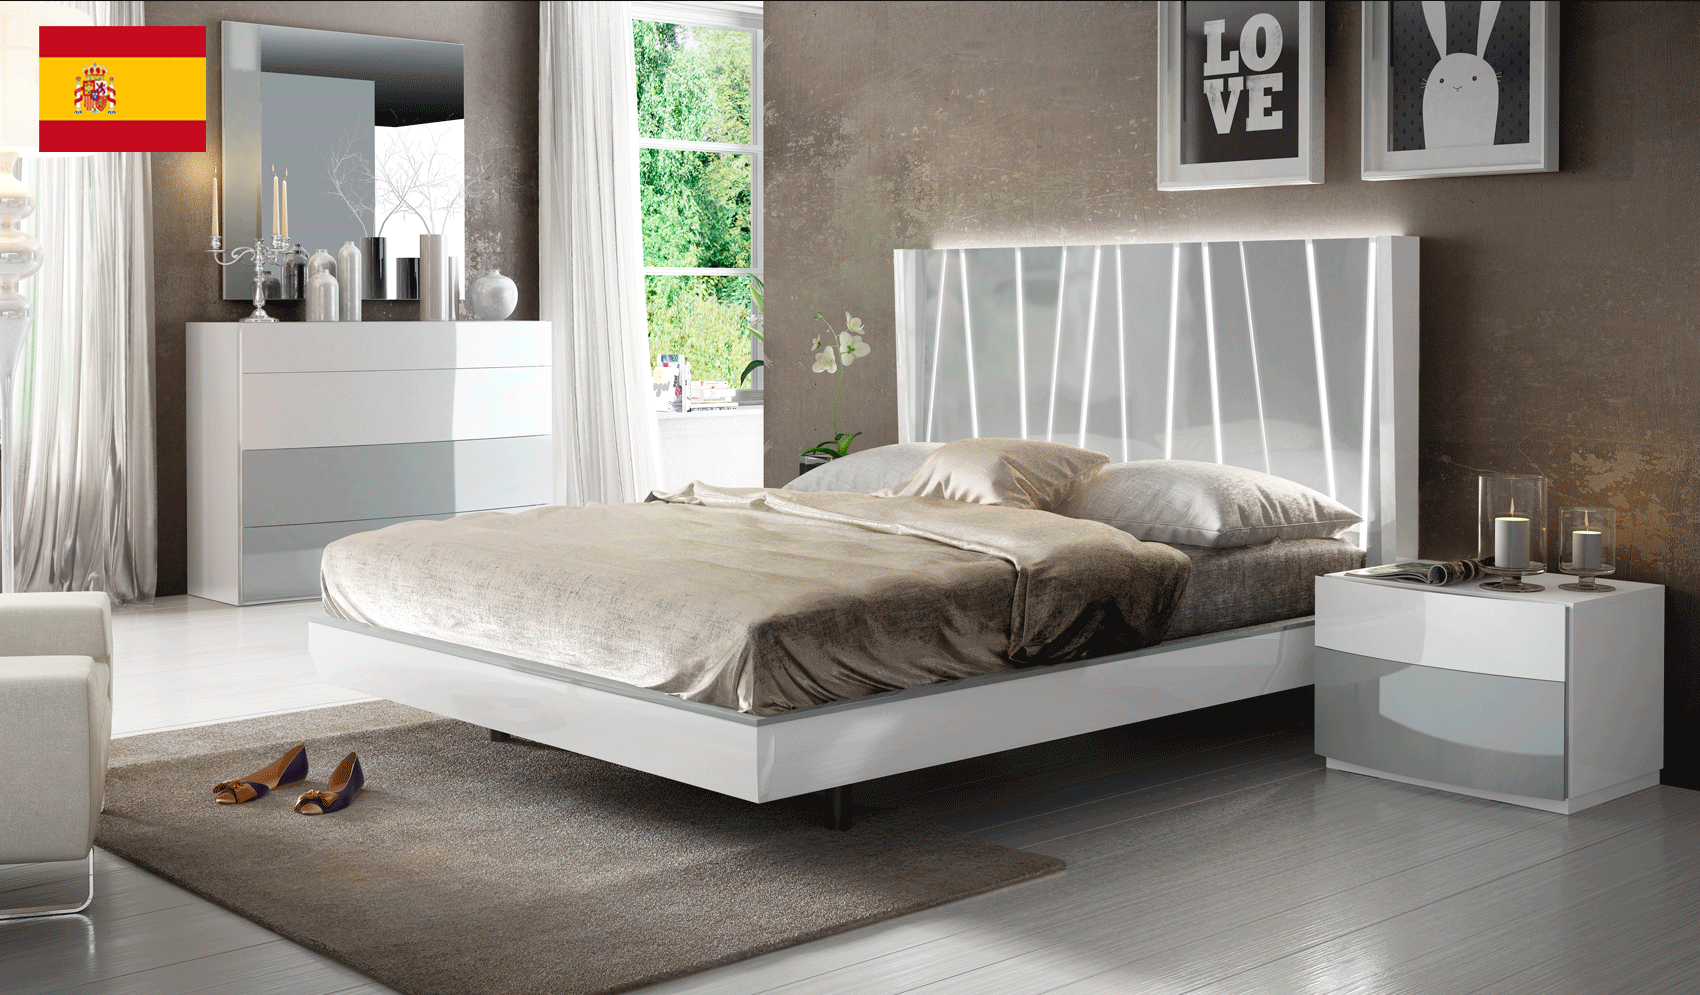 Bedroom Furniture Beds with storage Ronda DALI Bedroom